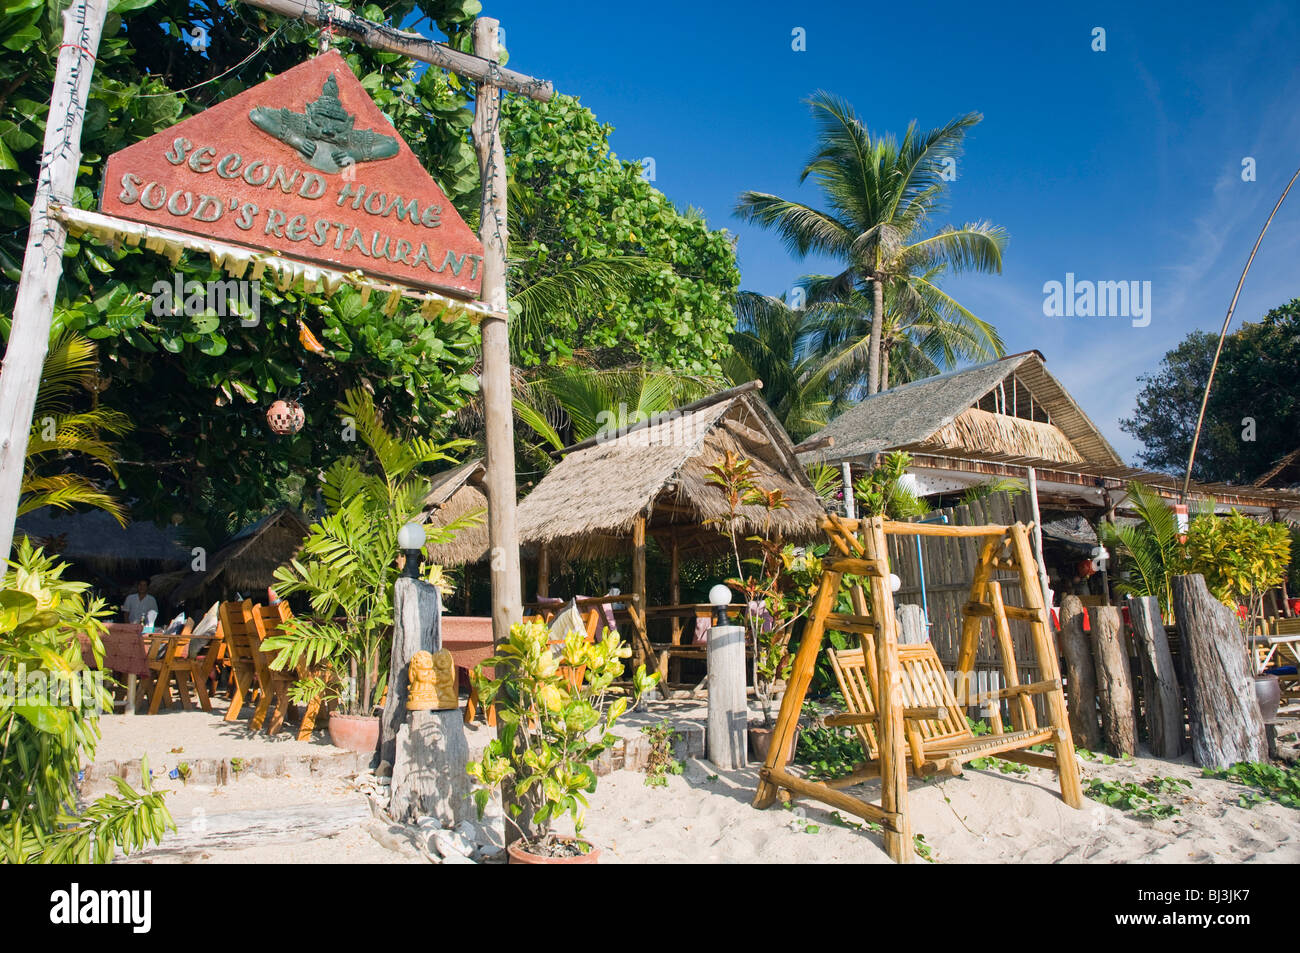 Second Home restaurant on the beach, Long Beach, Phra Ae Beach, island of Ko Lanta, Koh Lanta, Krabi, Thailand, Asia Stock Photo